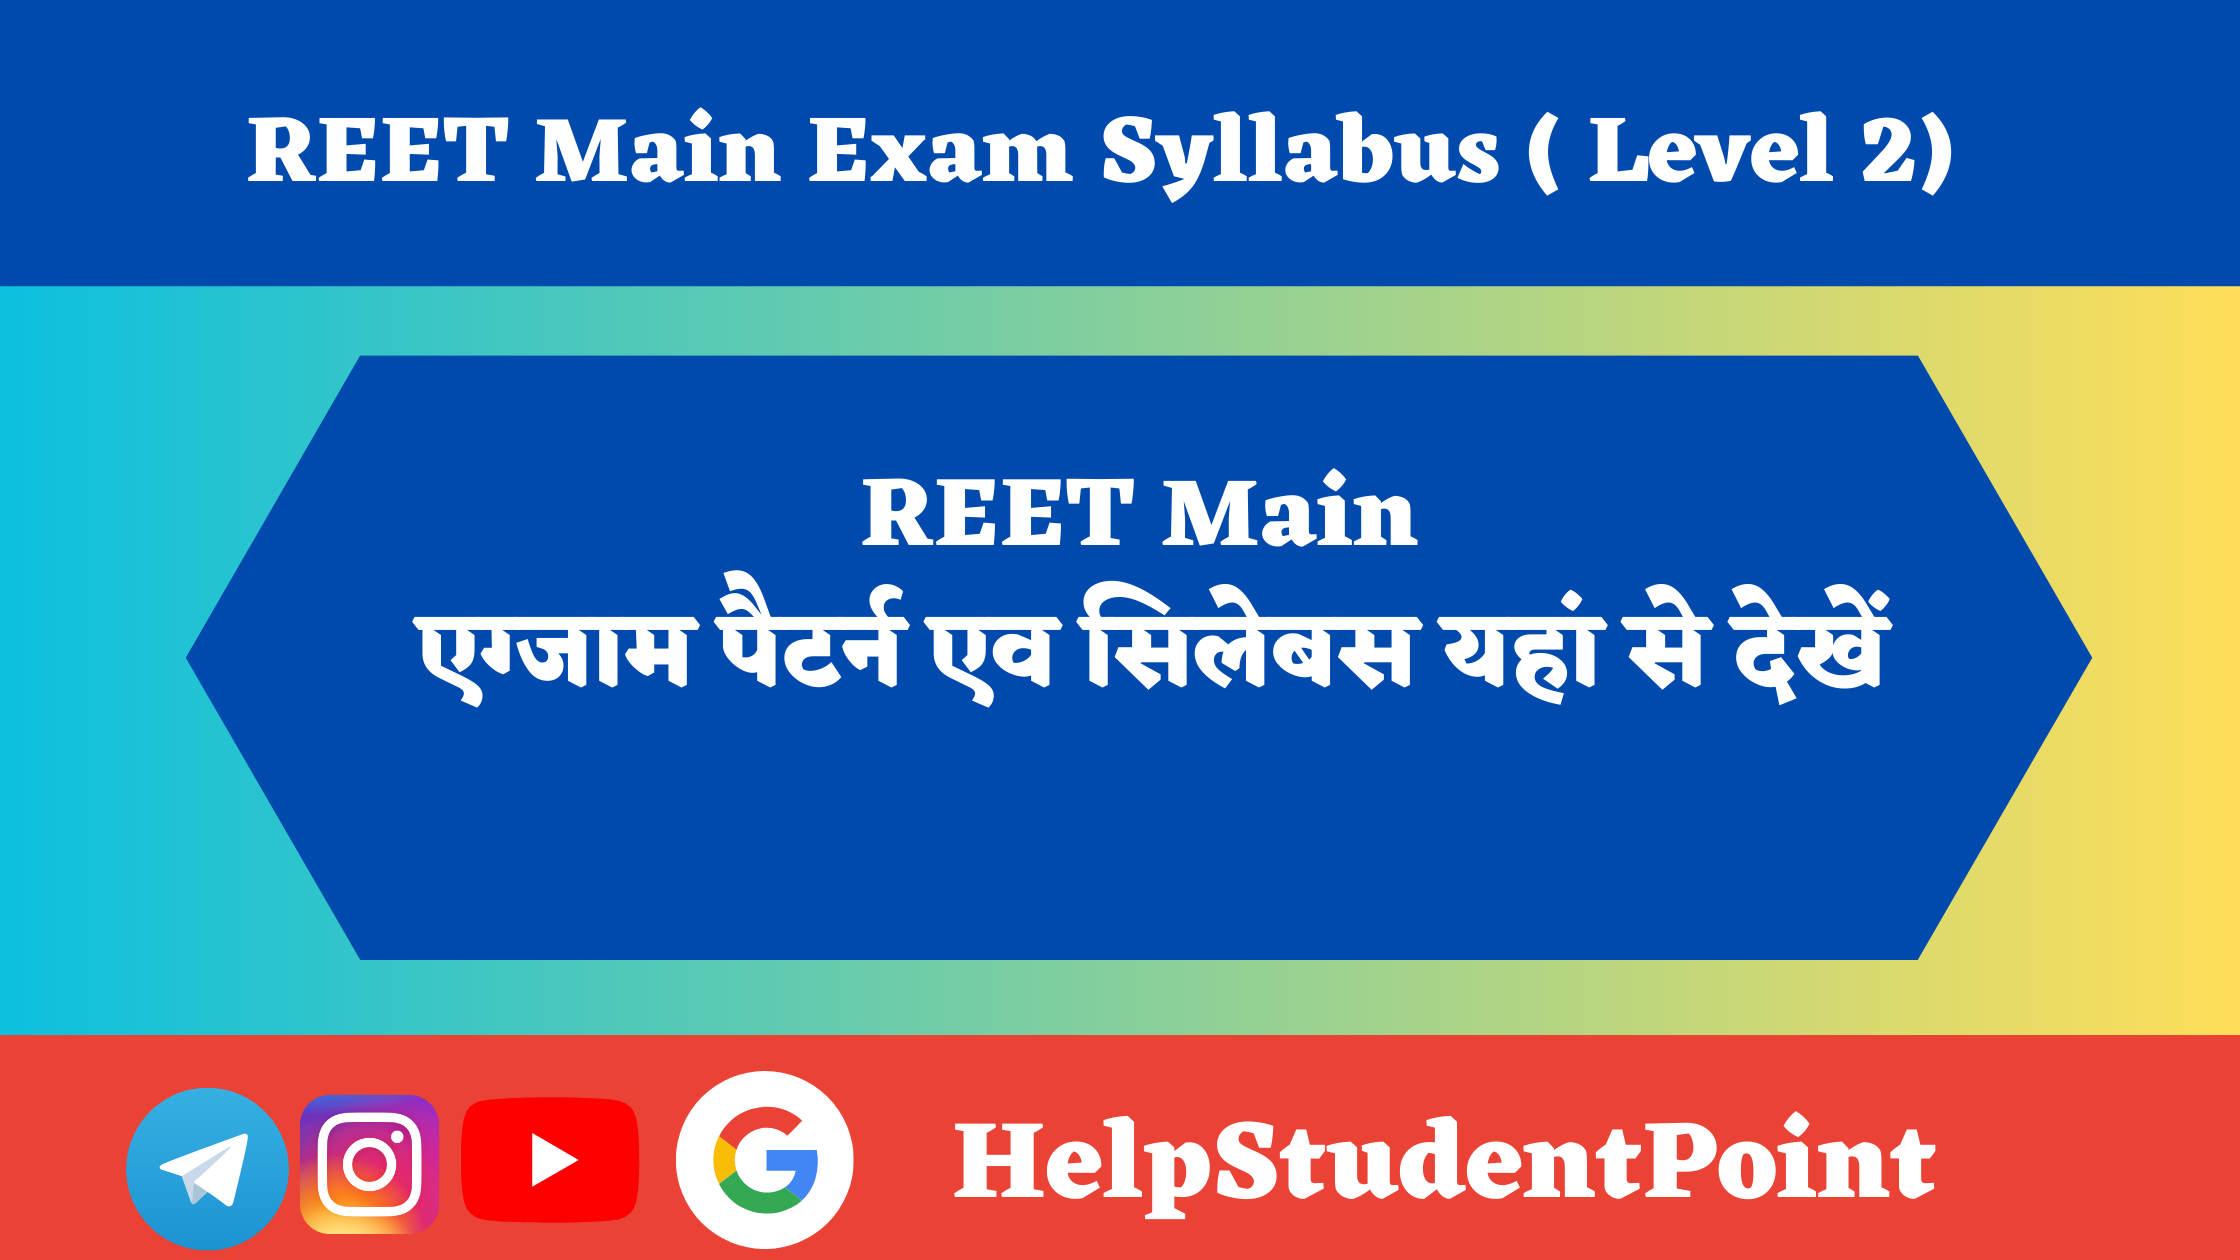 REET Main Exam Syllabus Level 2